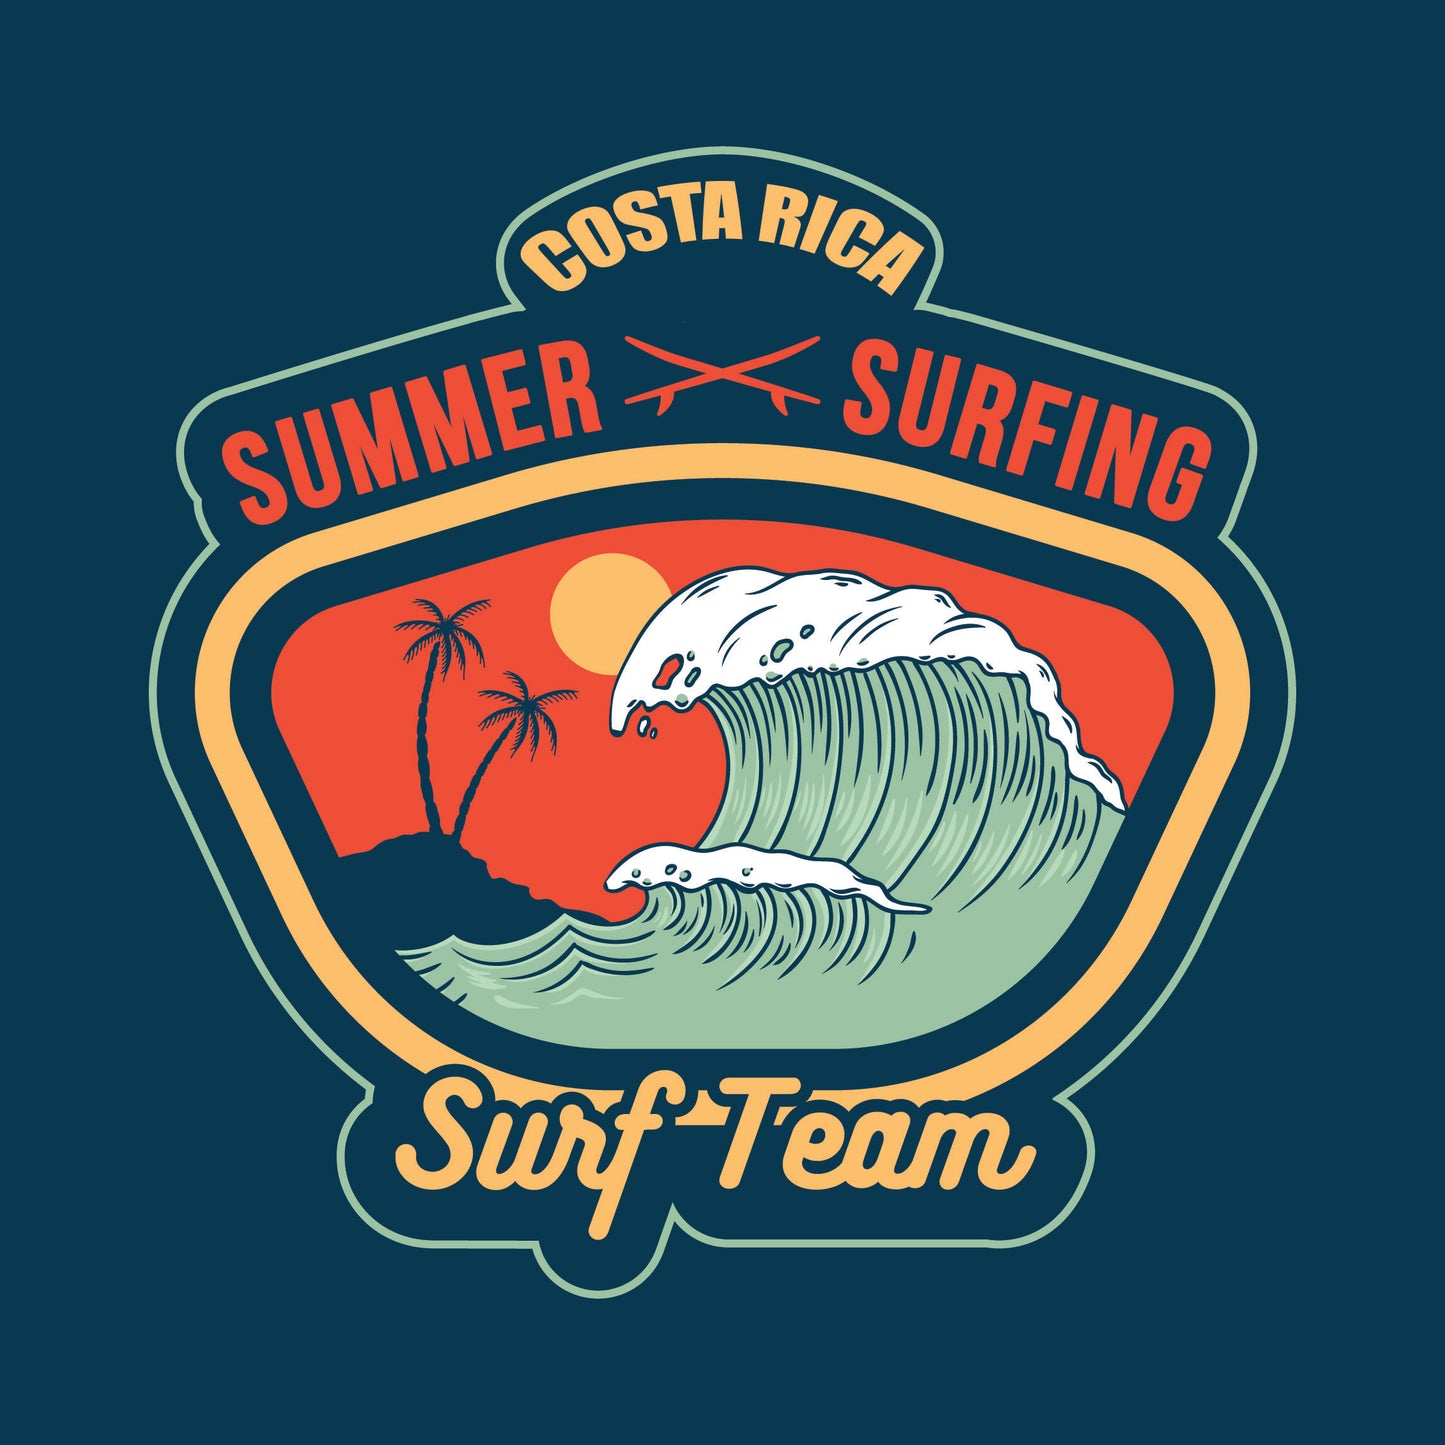 Pegatina Equipo de surf de Costa Rica